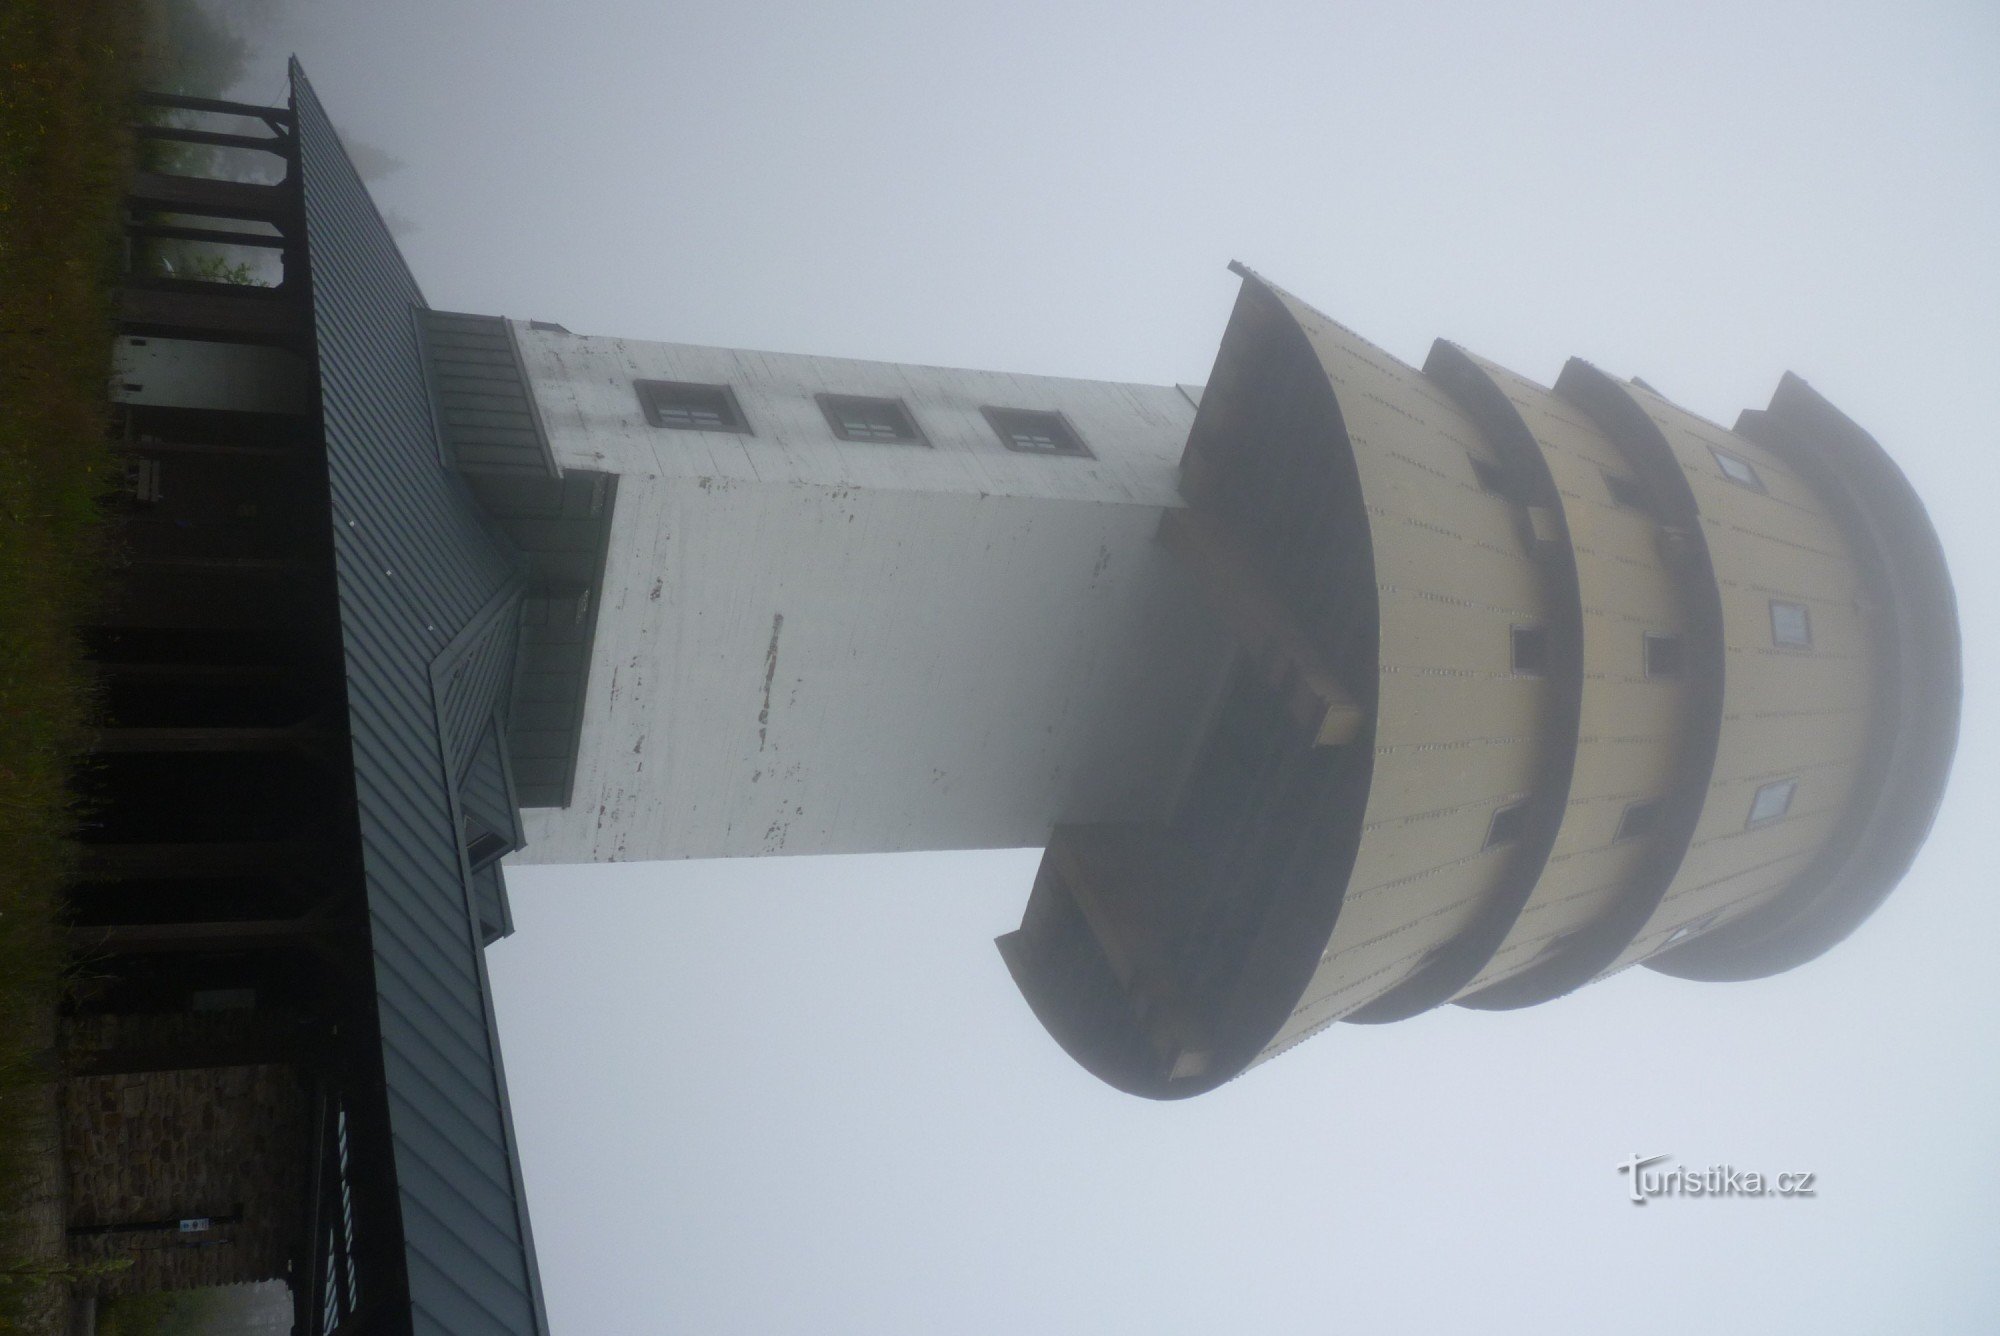 Meridiano - torre de vigia